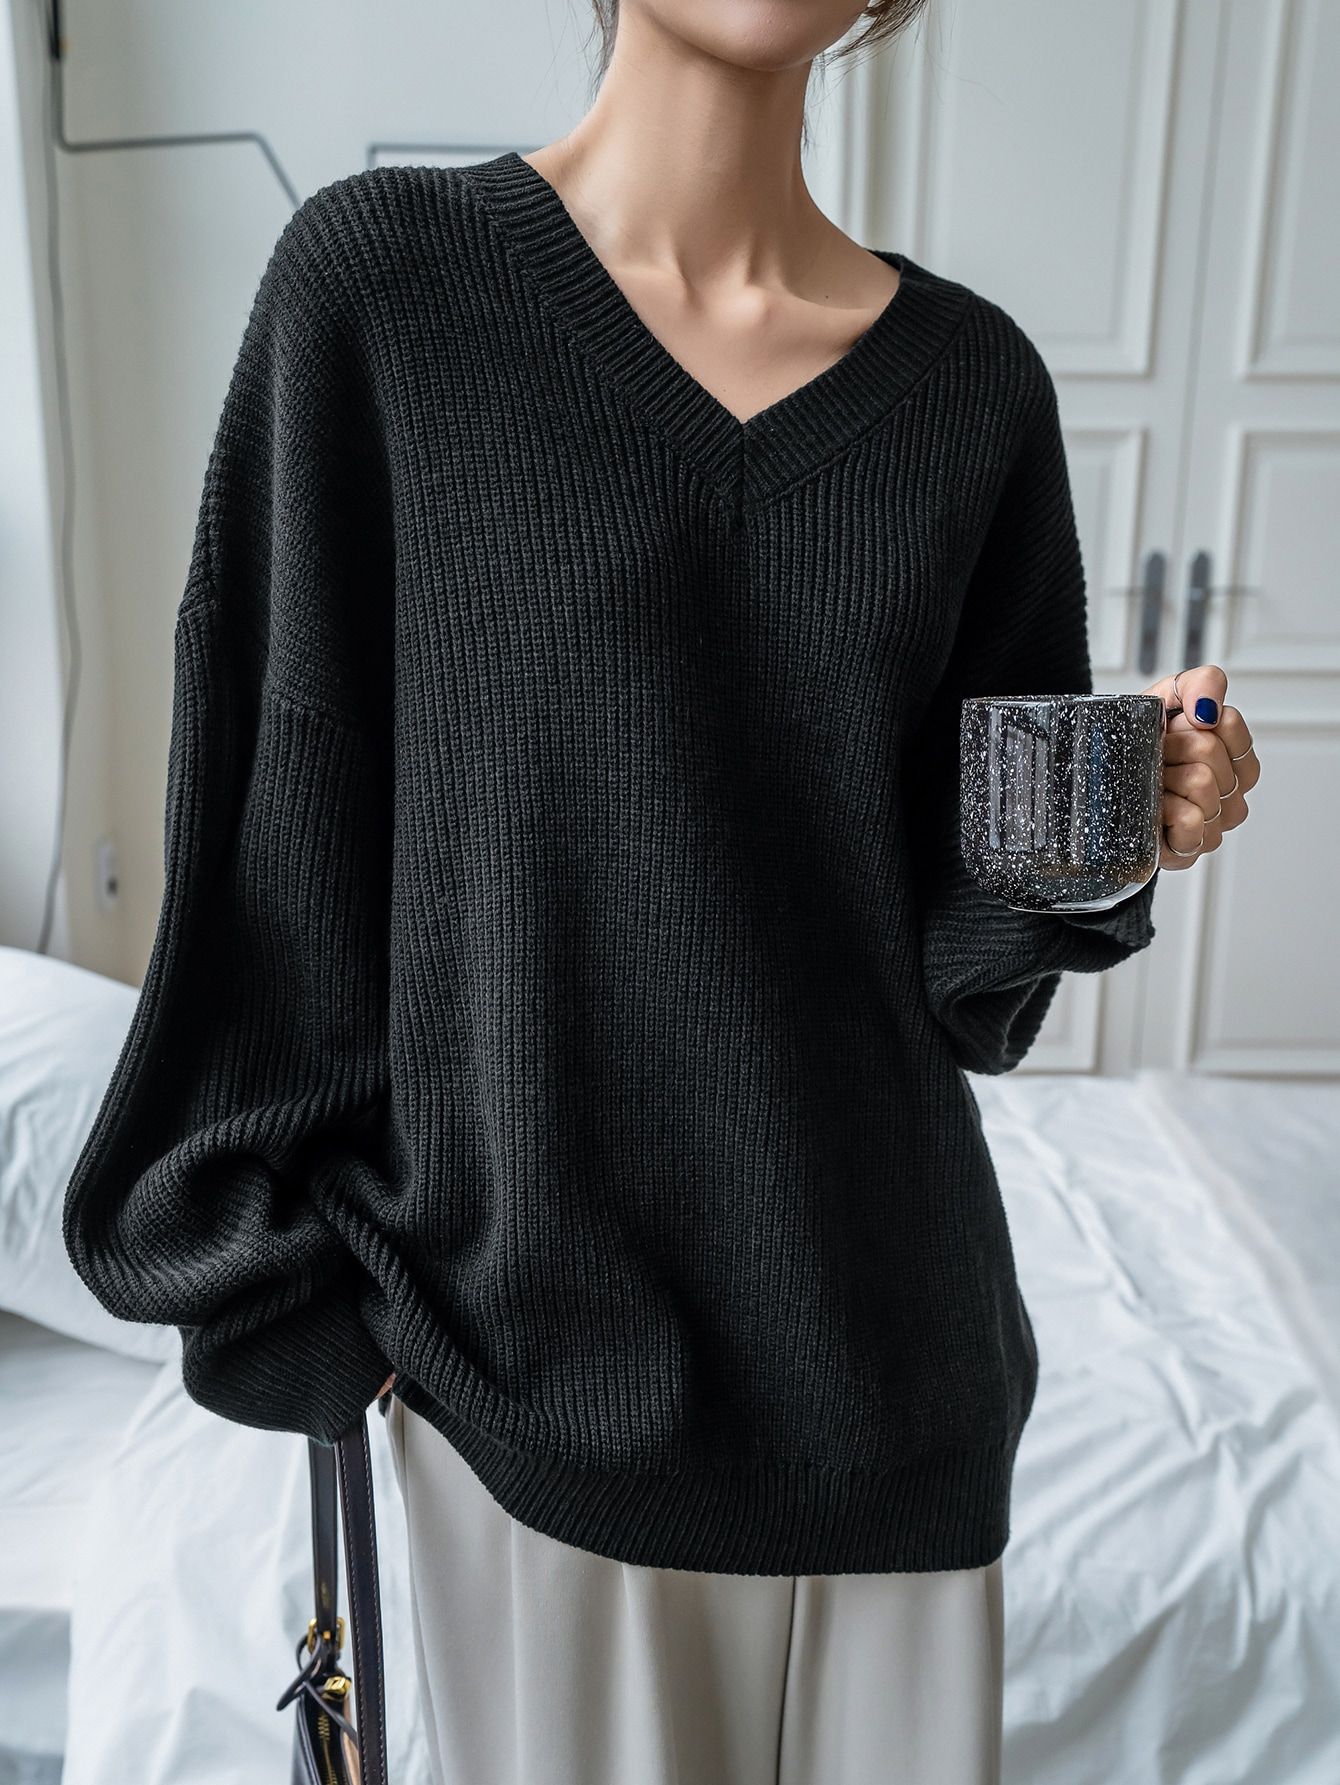 Essential Wardrobe Piece: The Black
V-Neck Sweater